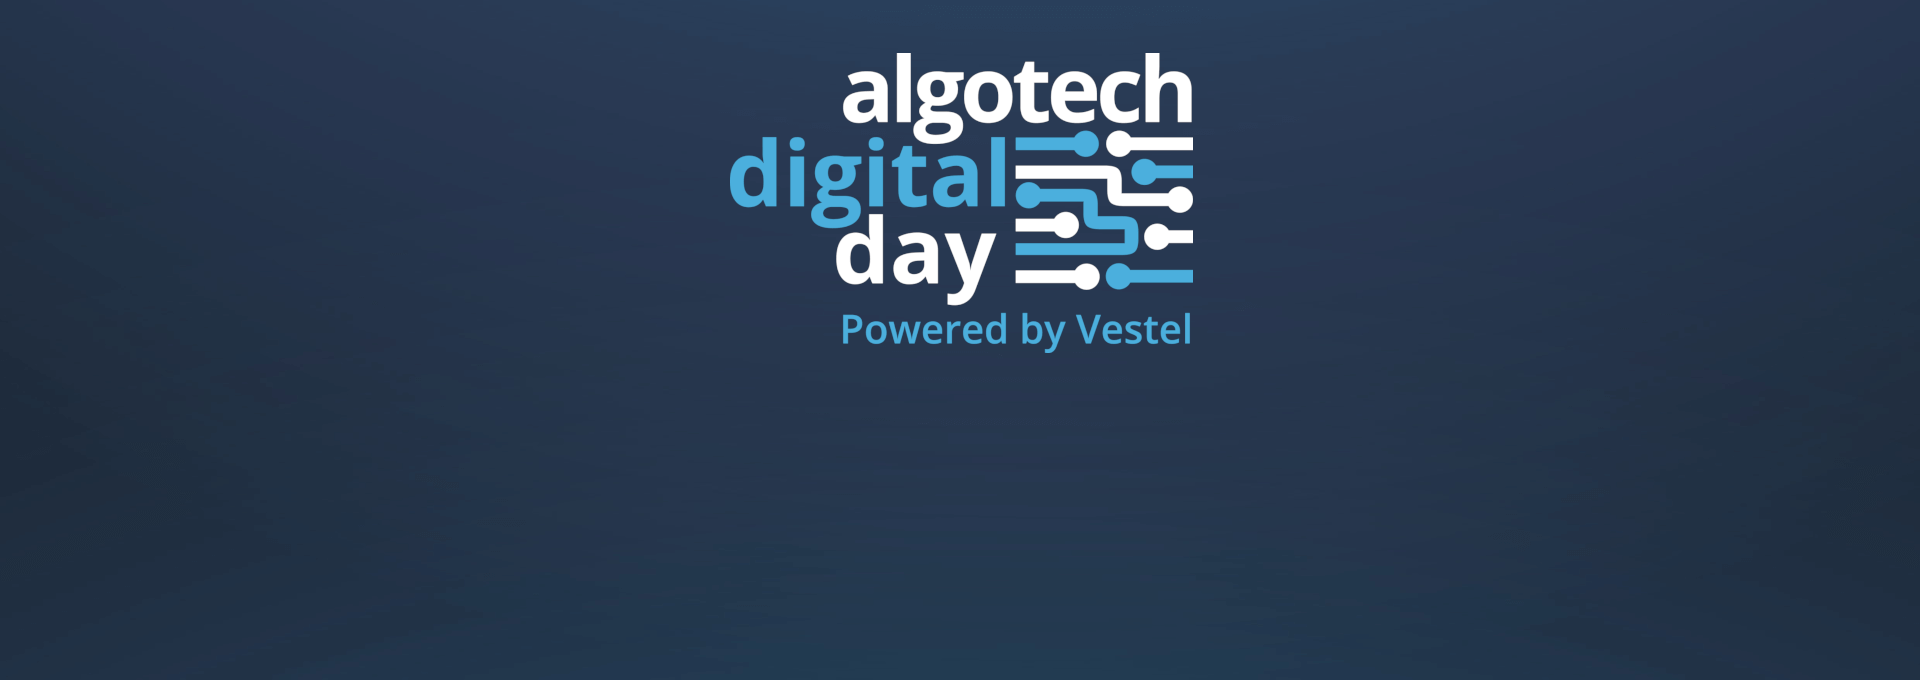 Algotech Digital Day